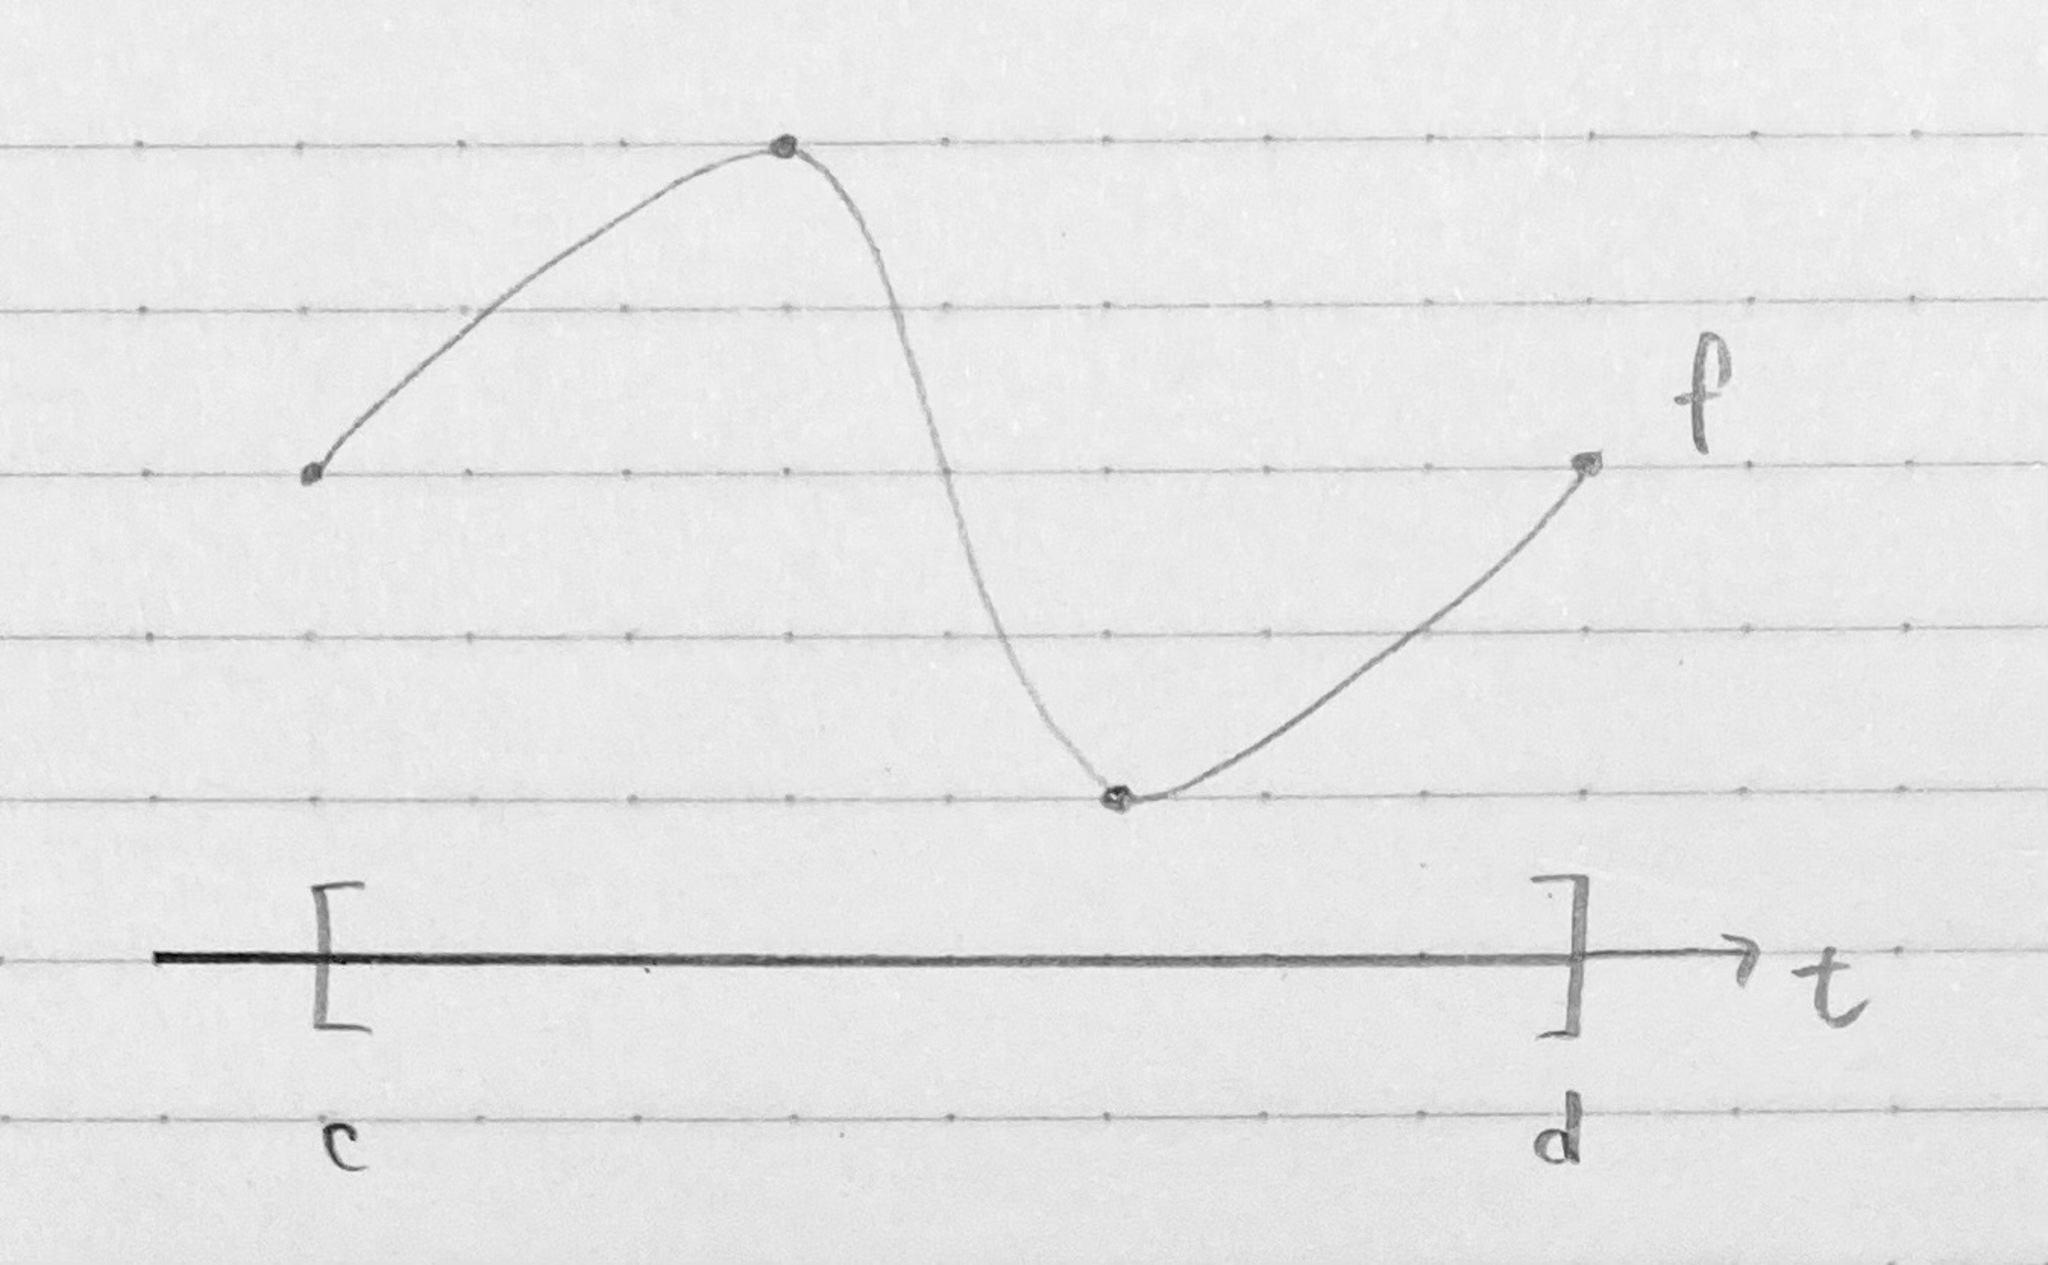 [c, d] 上の関数 f